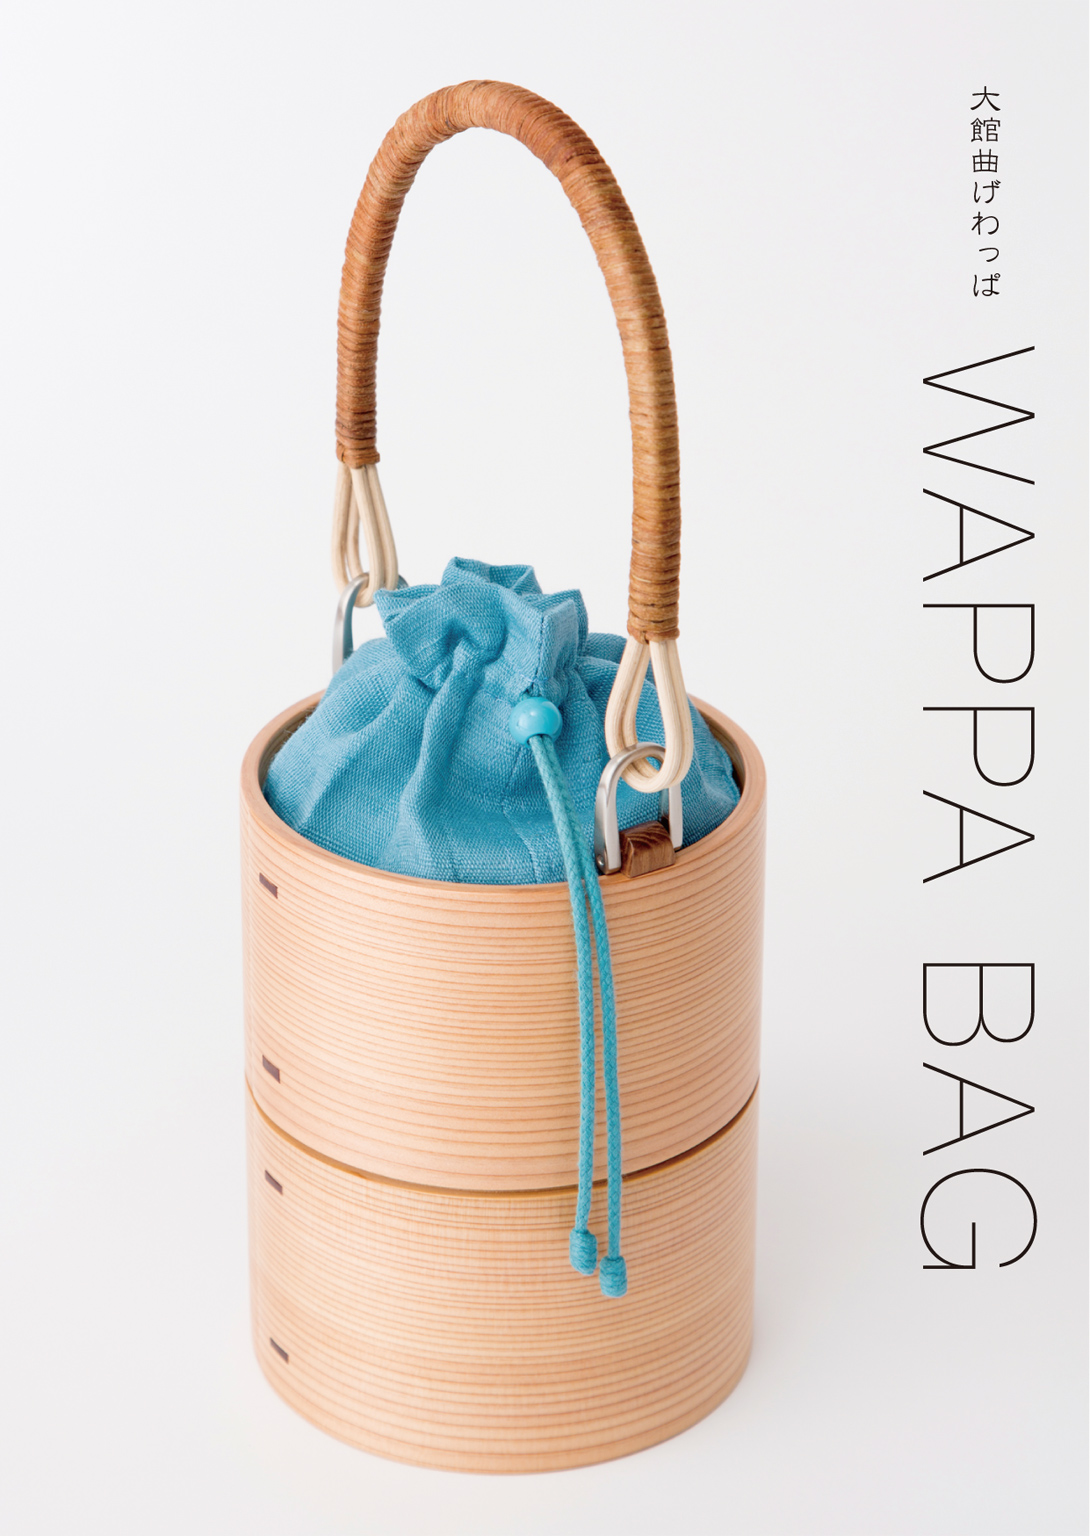 WAPPA BAG Catalogue